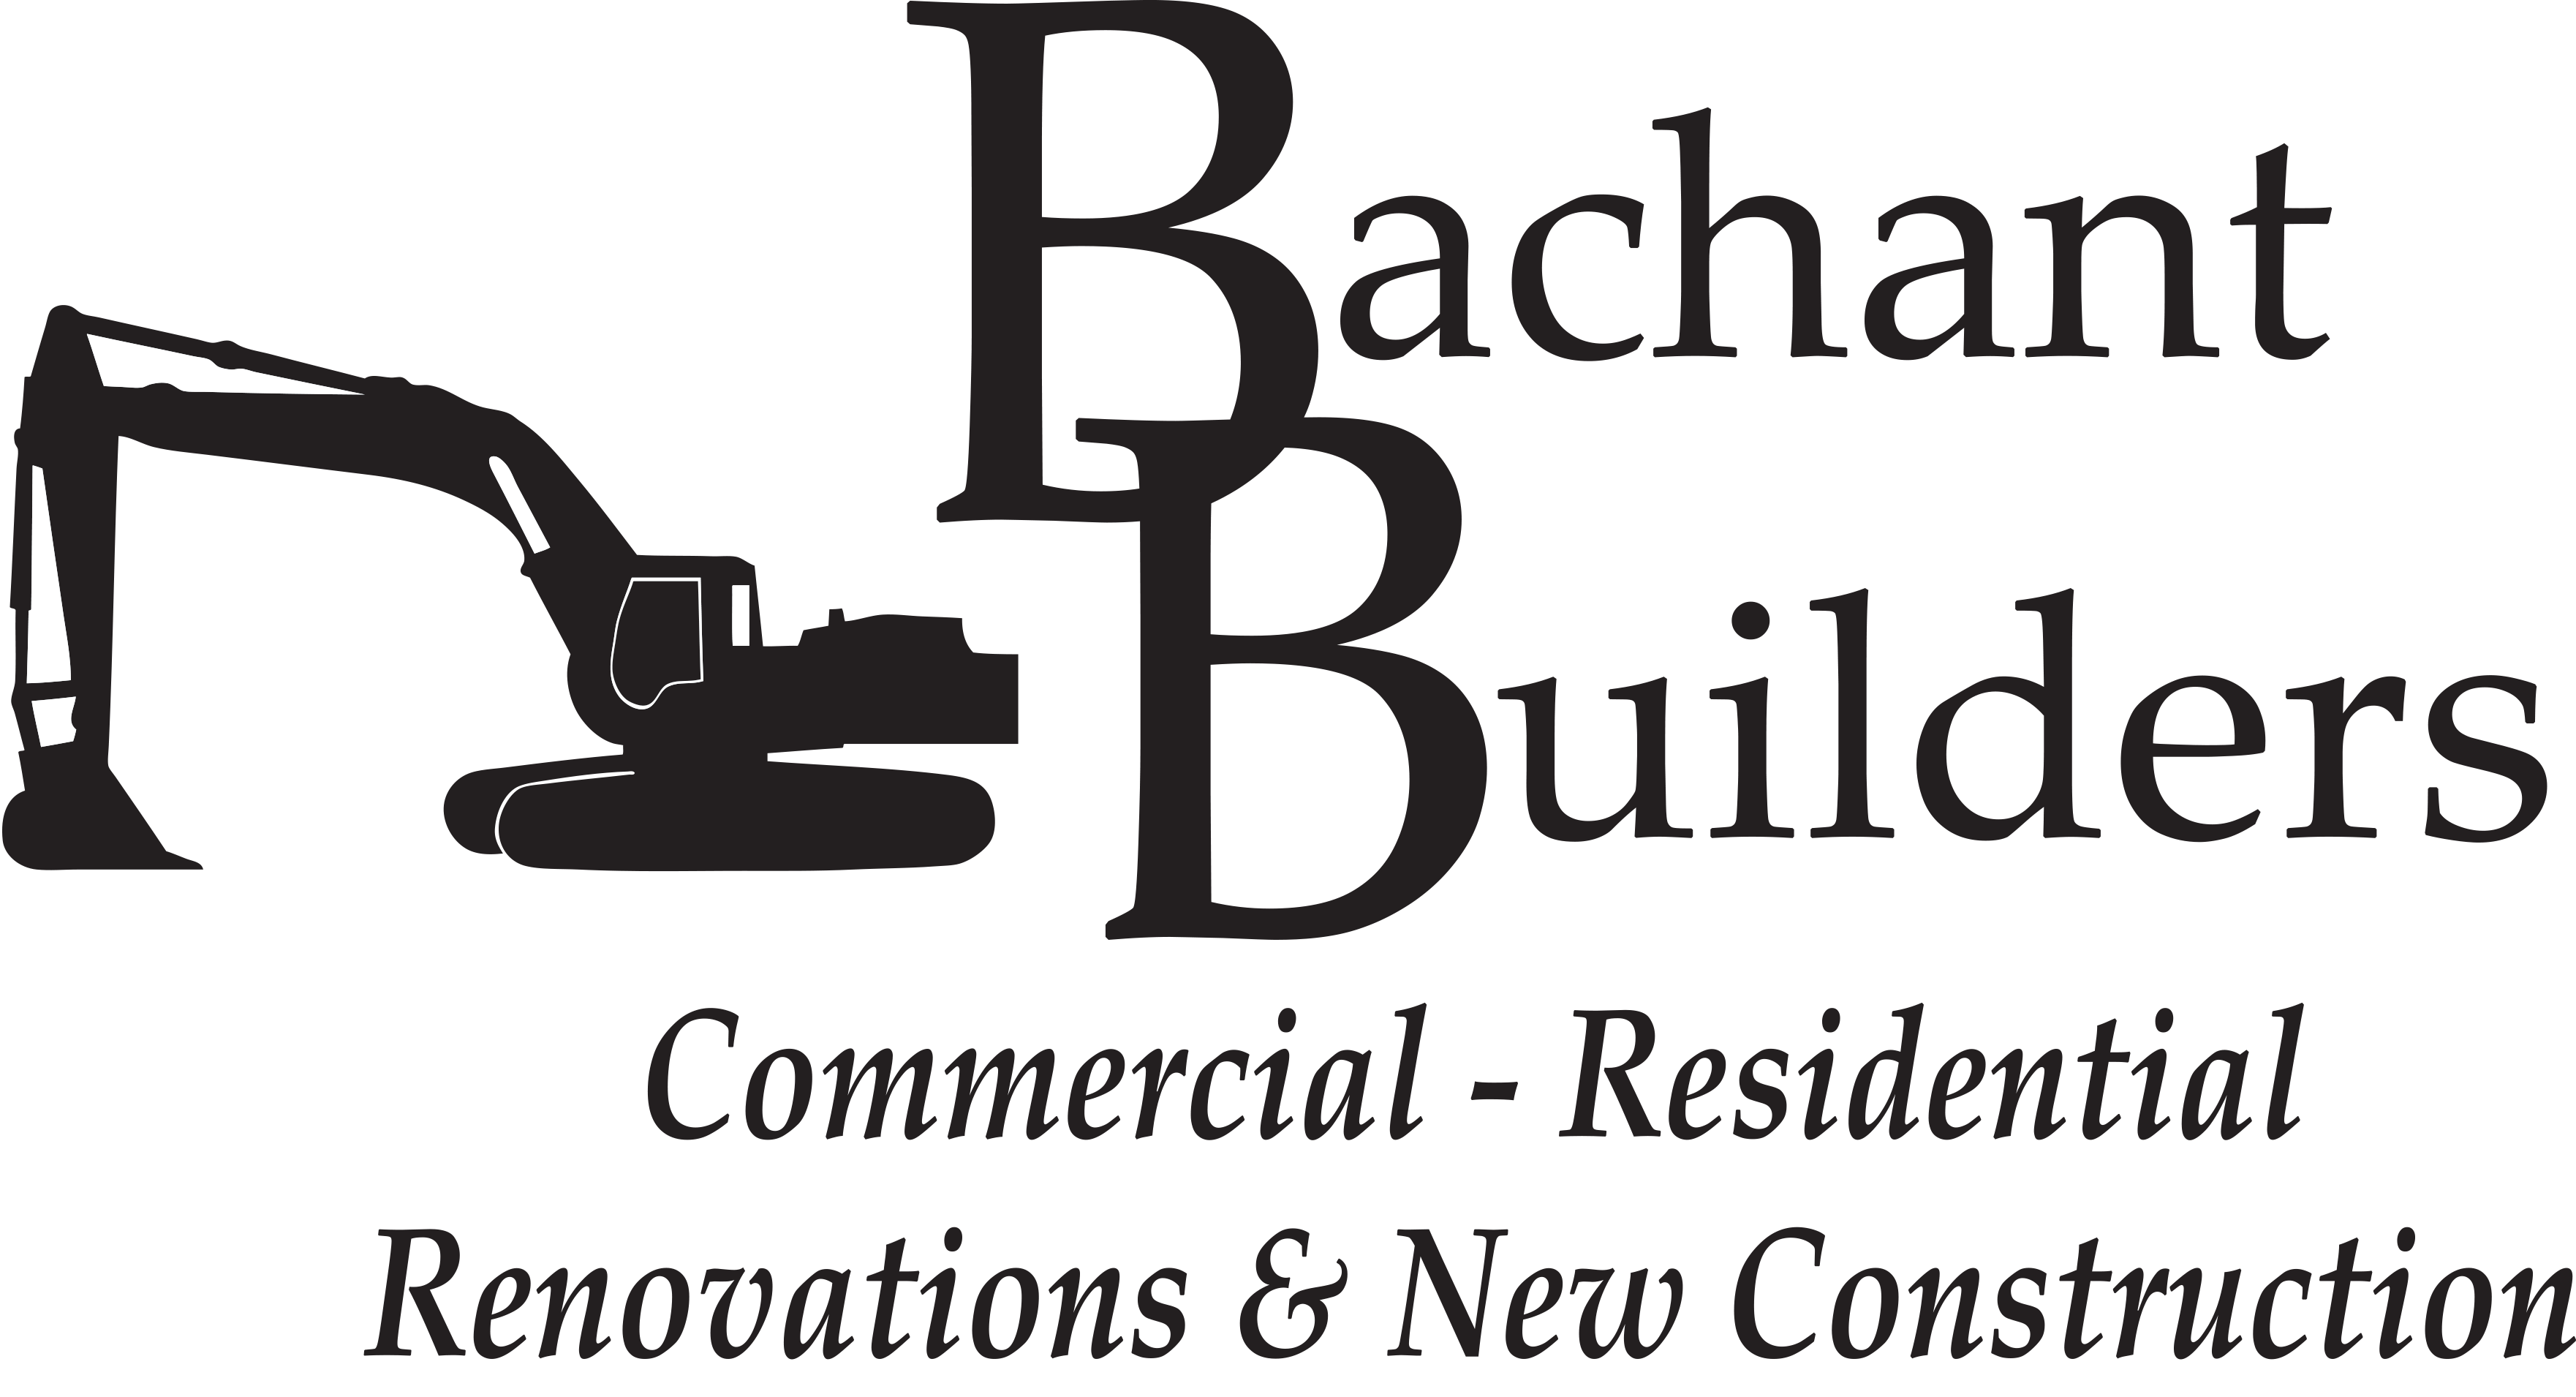 Bachant Builders